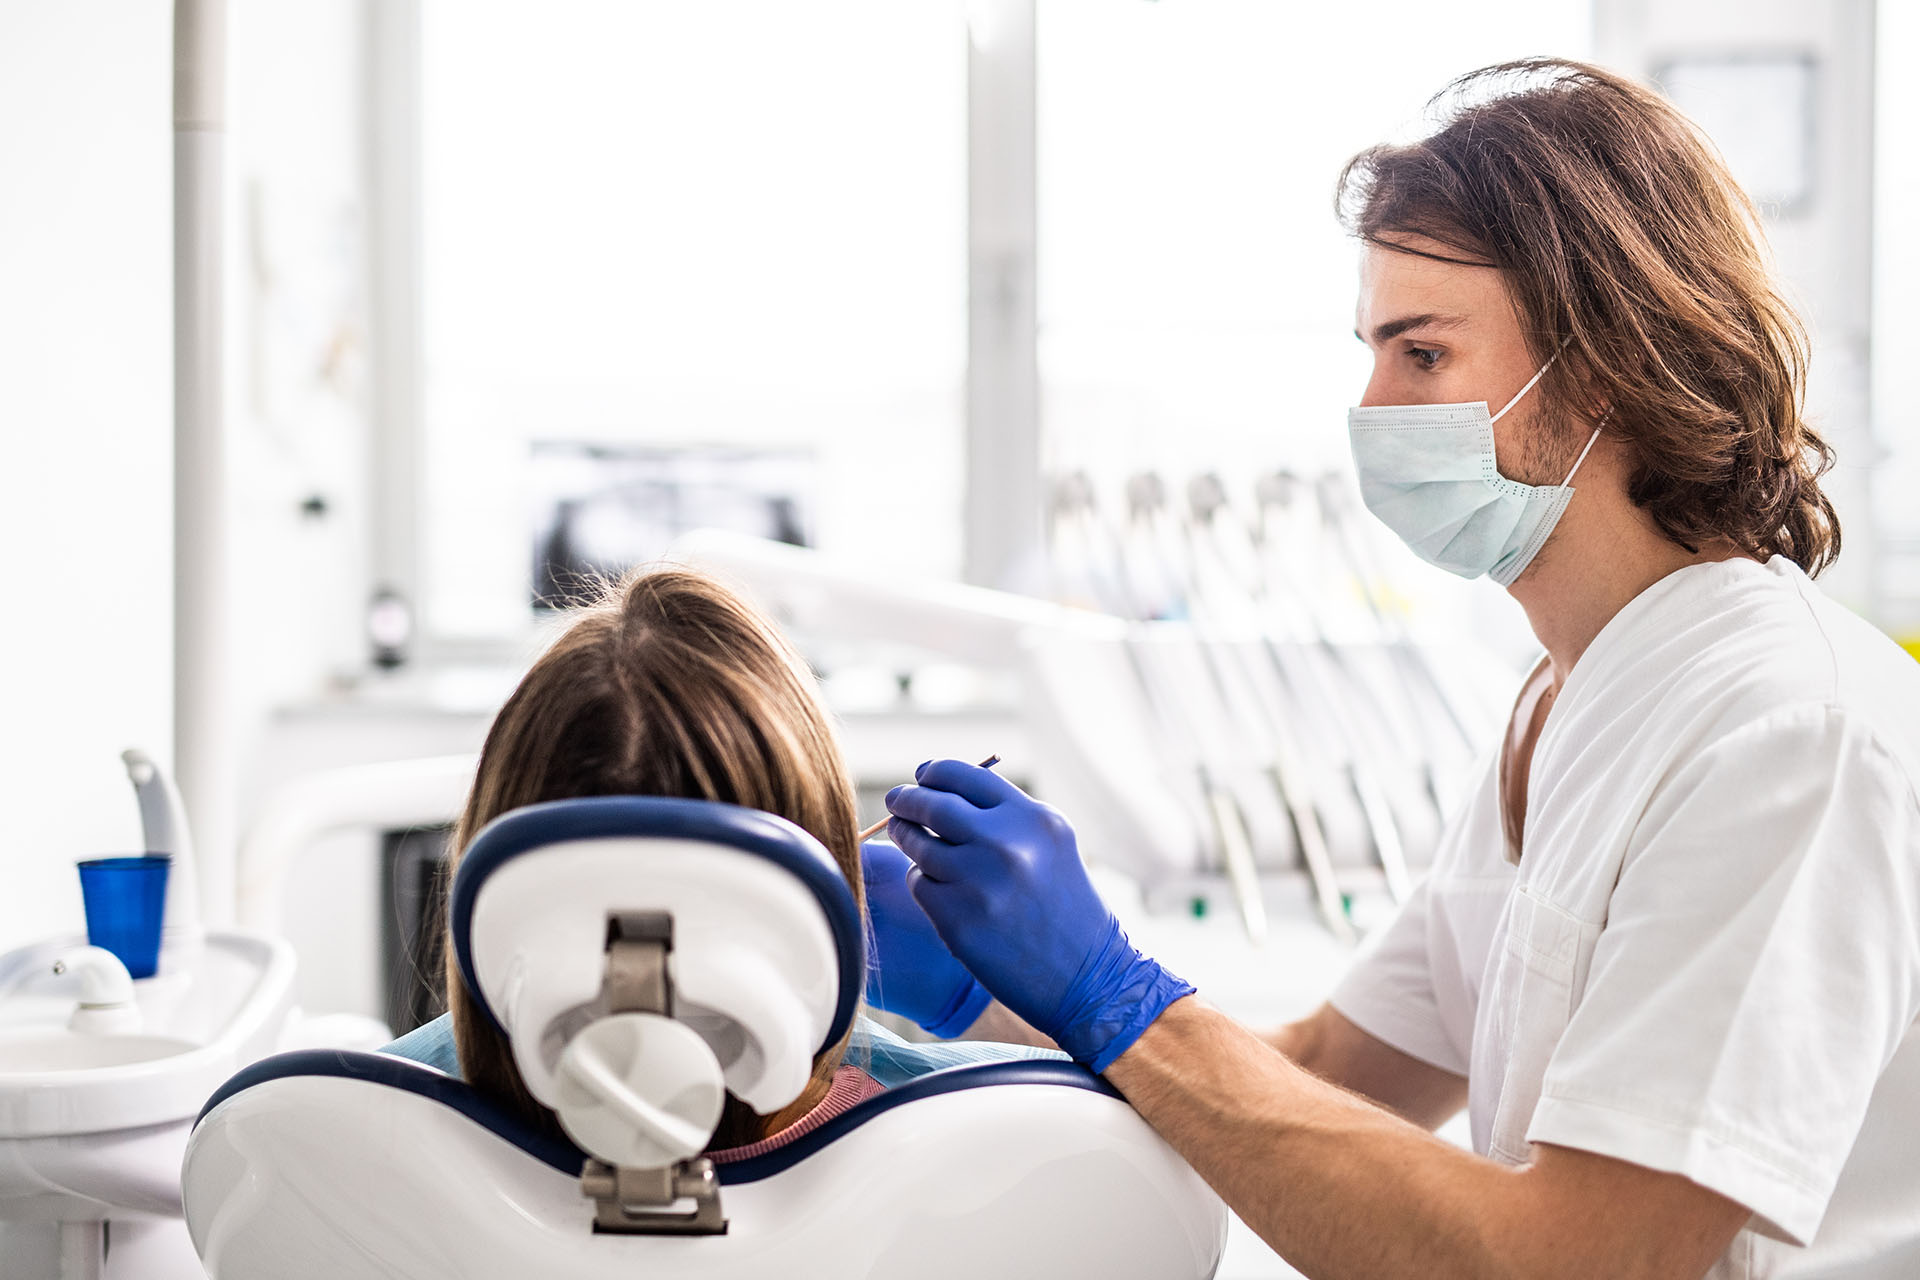 Clínica Dental Andrea Compte, tu Centro Odontológico especializado. Cirugía bucal en Benicarló. Dentista realizando un chequeo dental a la paciente.